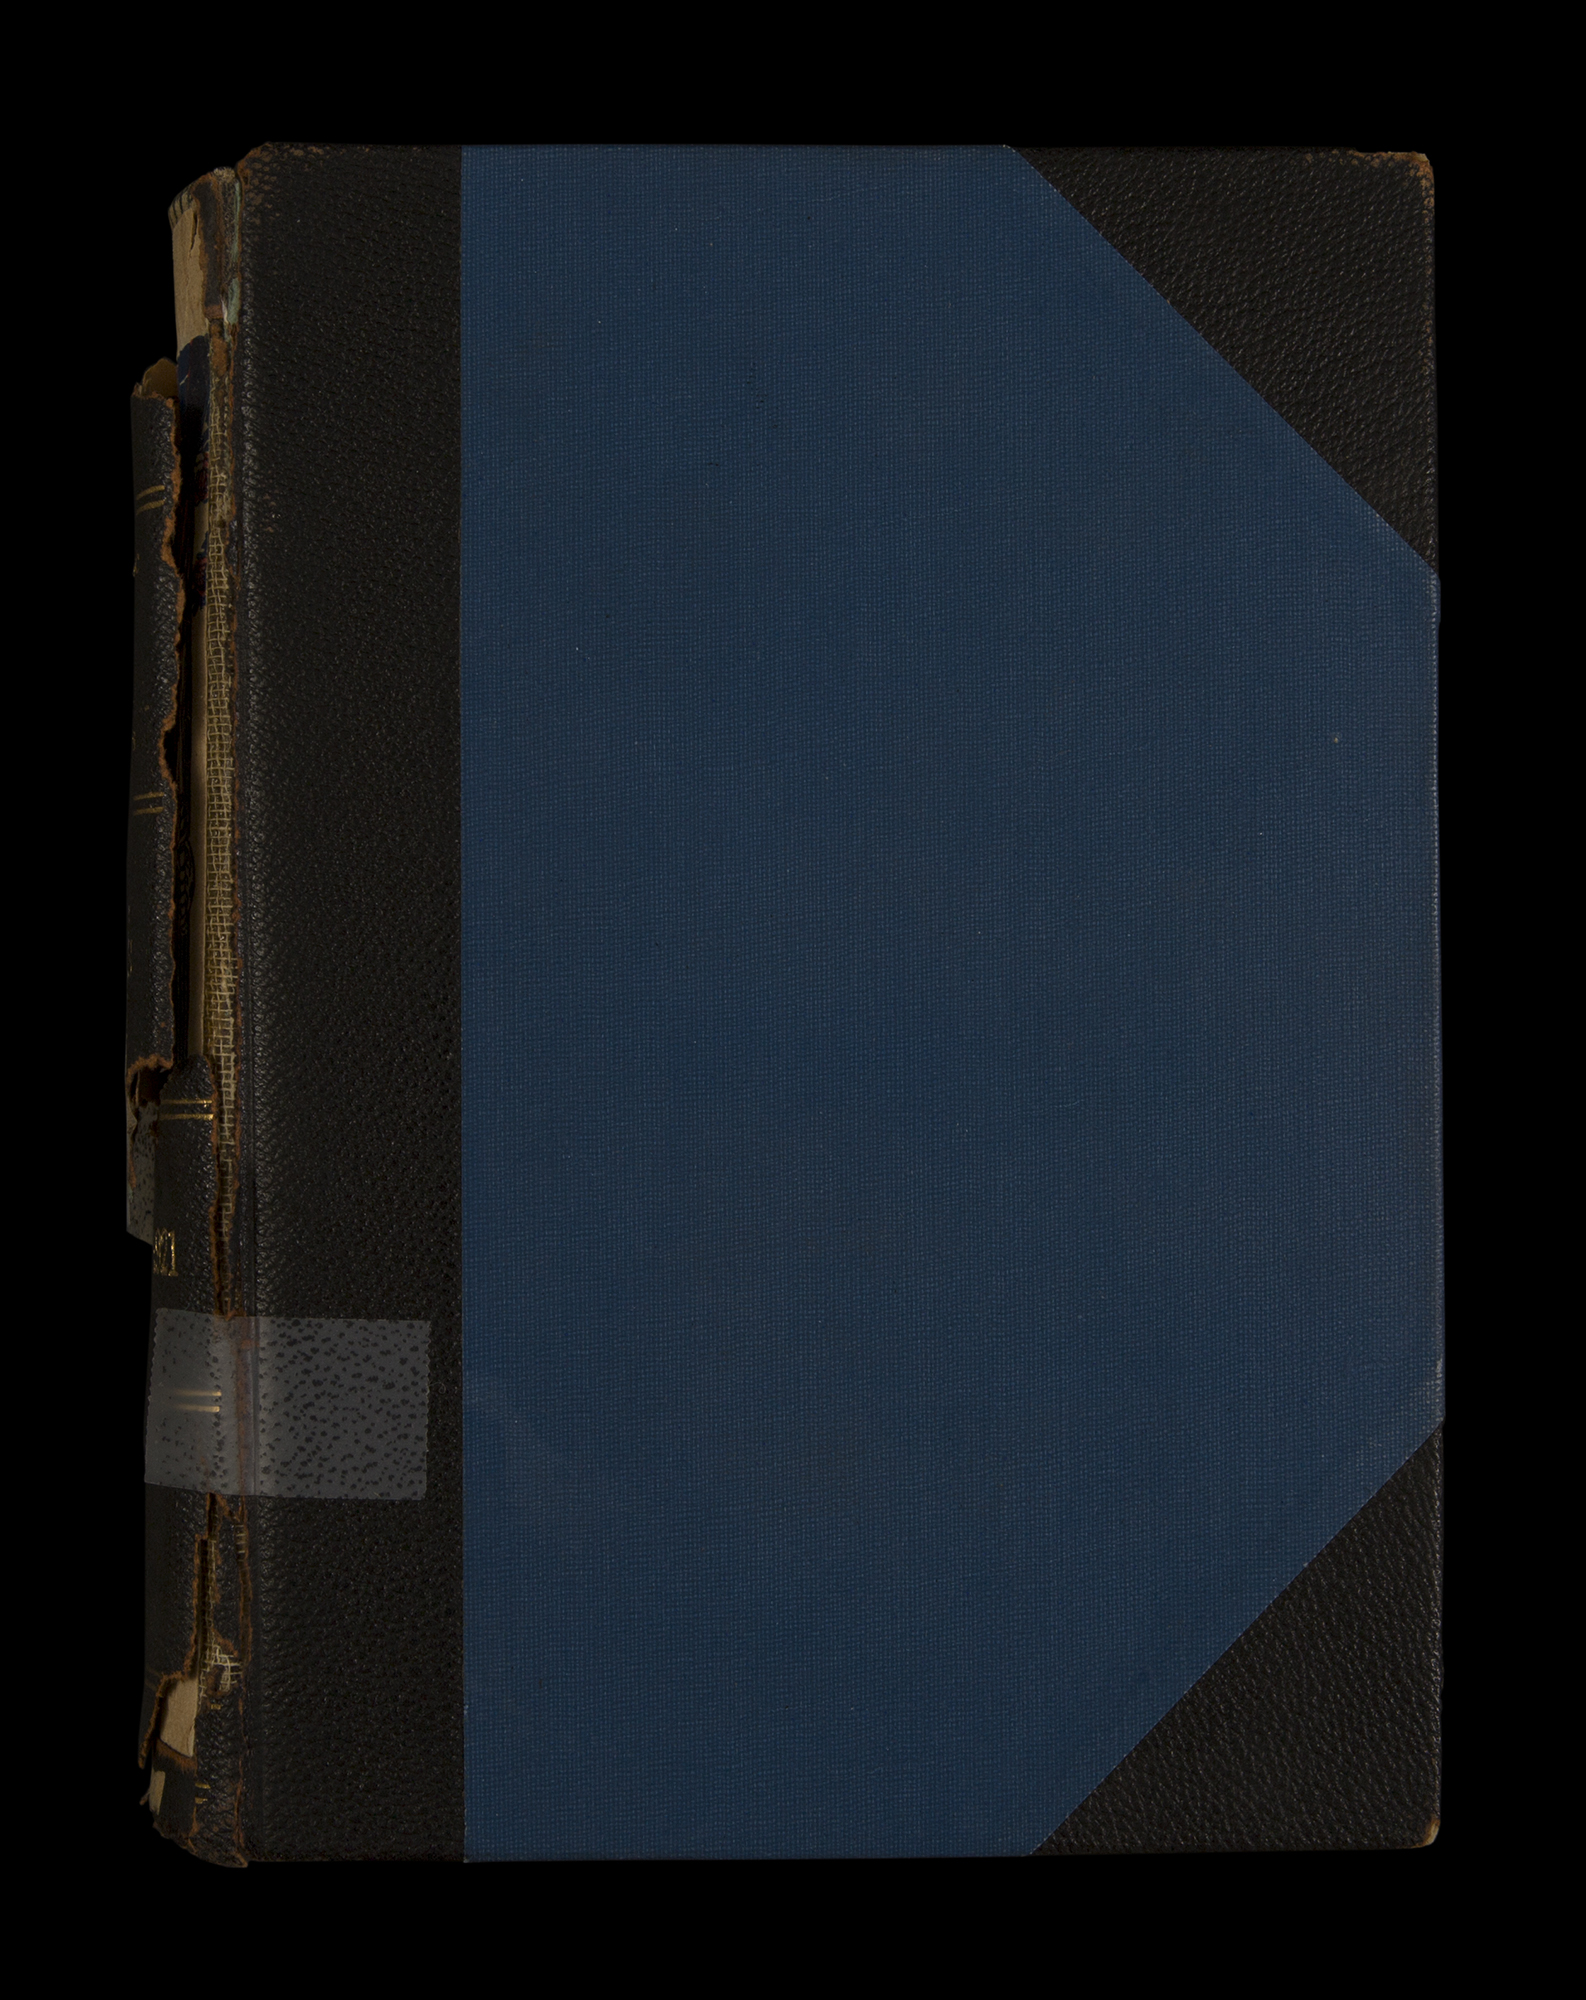 LAPO_ProgramBook_Cover_1920-1921.jpg